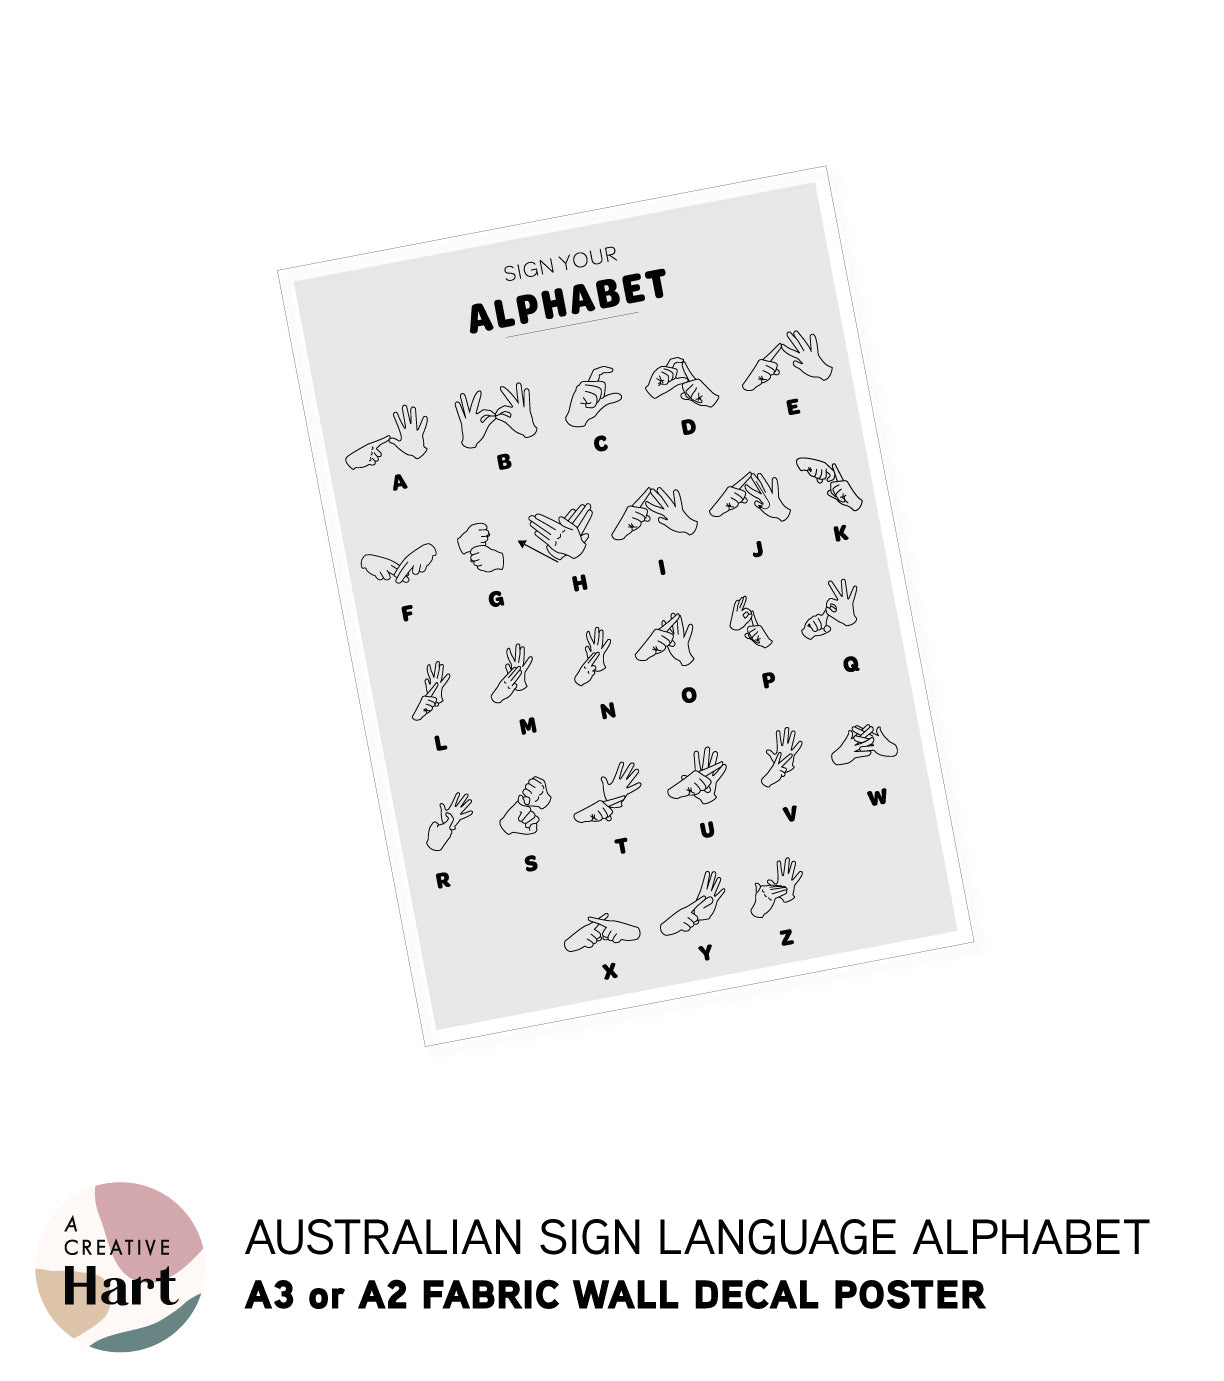 Sign the Alphabet | Sign Language Alphabet Poster Decal